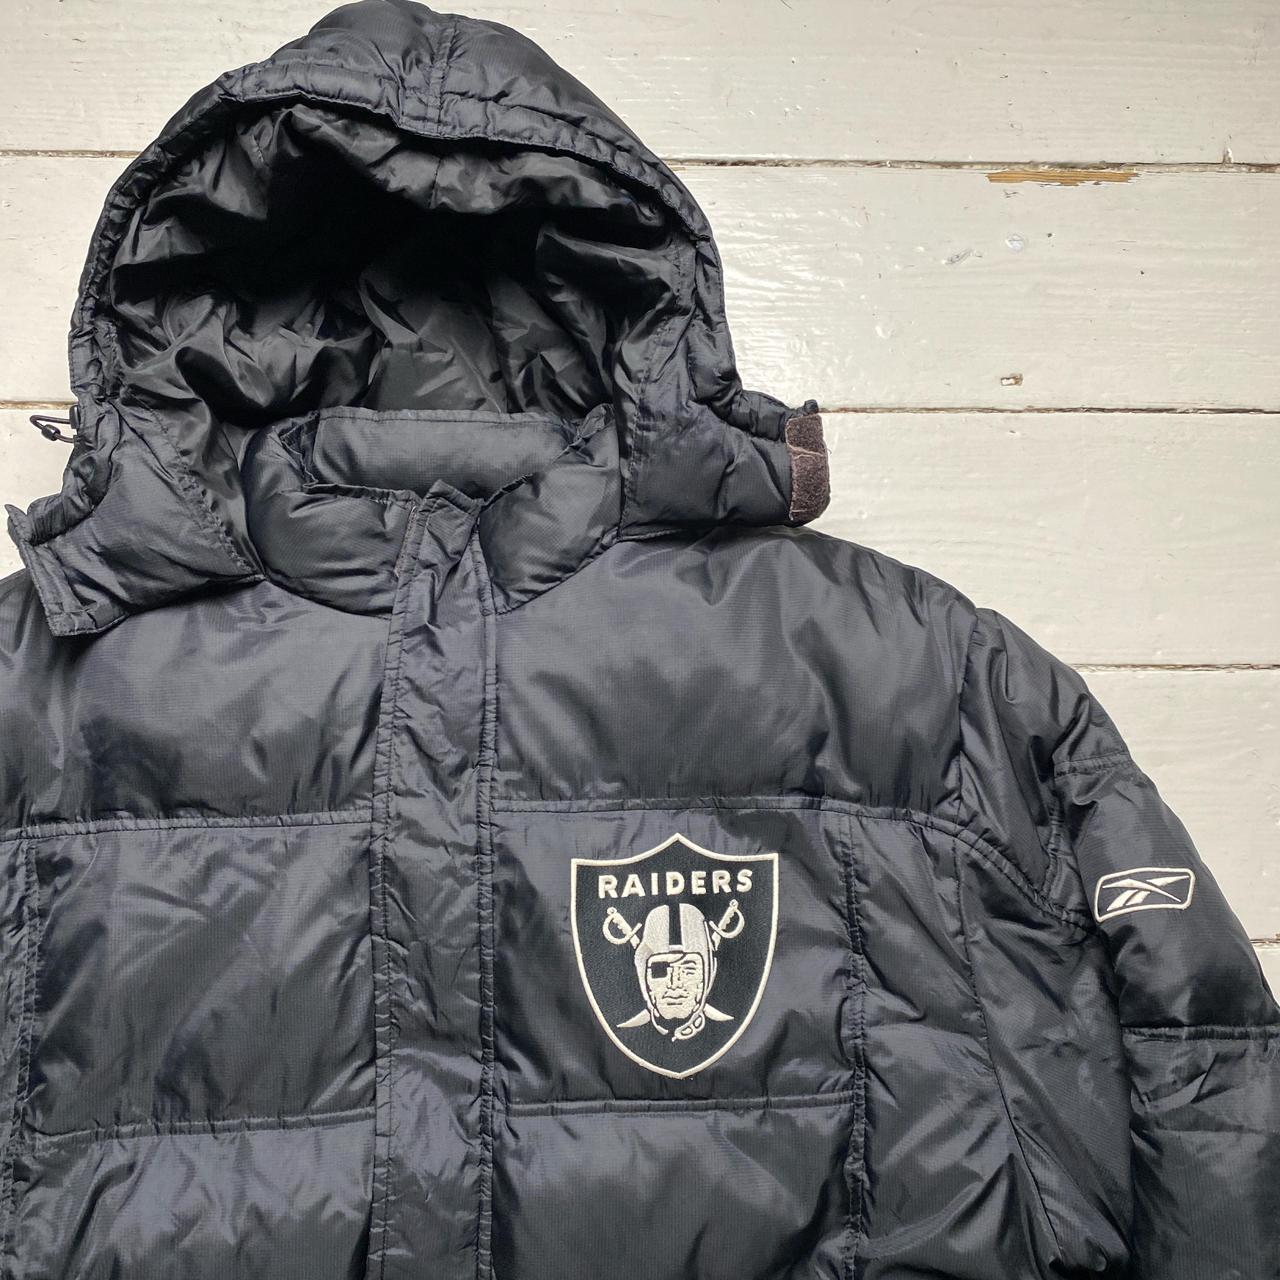 NFL Raiders Reebok Vintage Black Grey and White Puffer Jacket